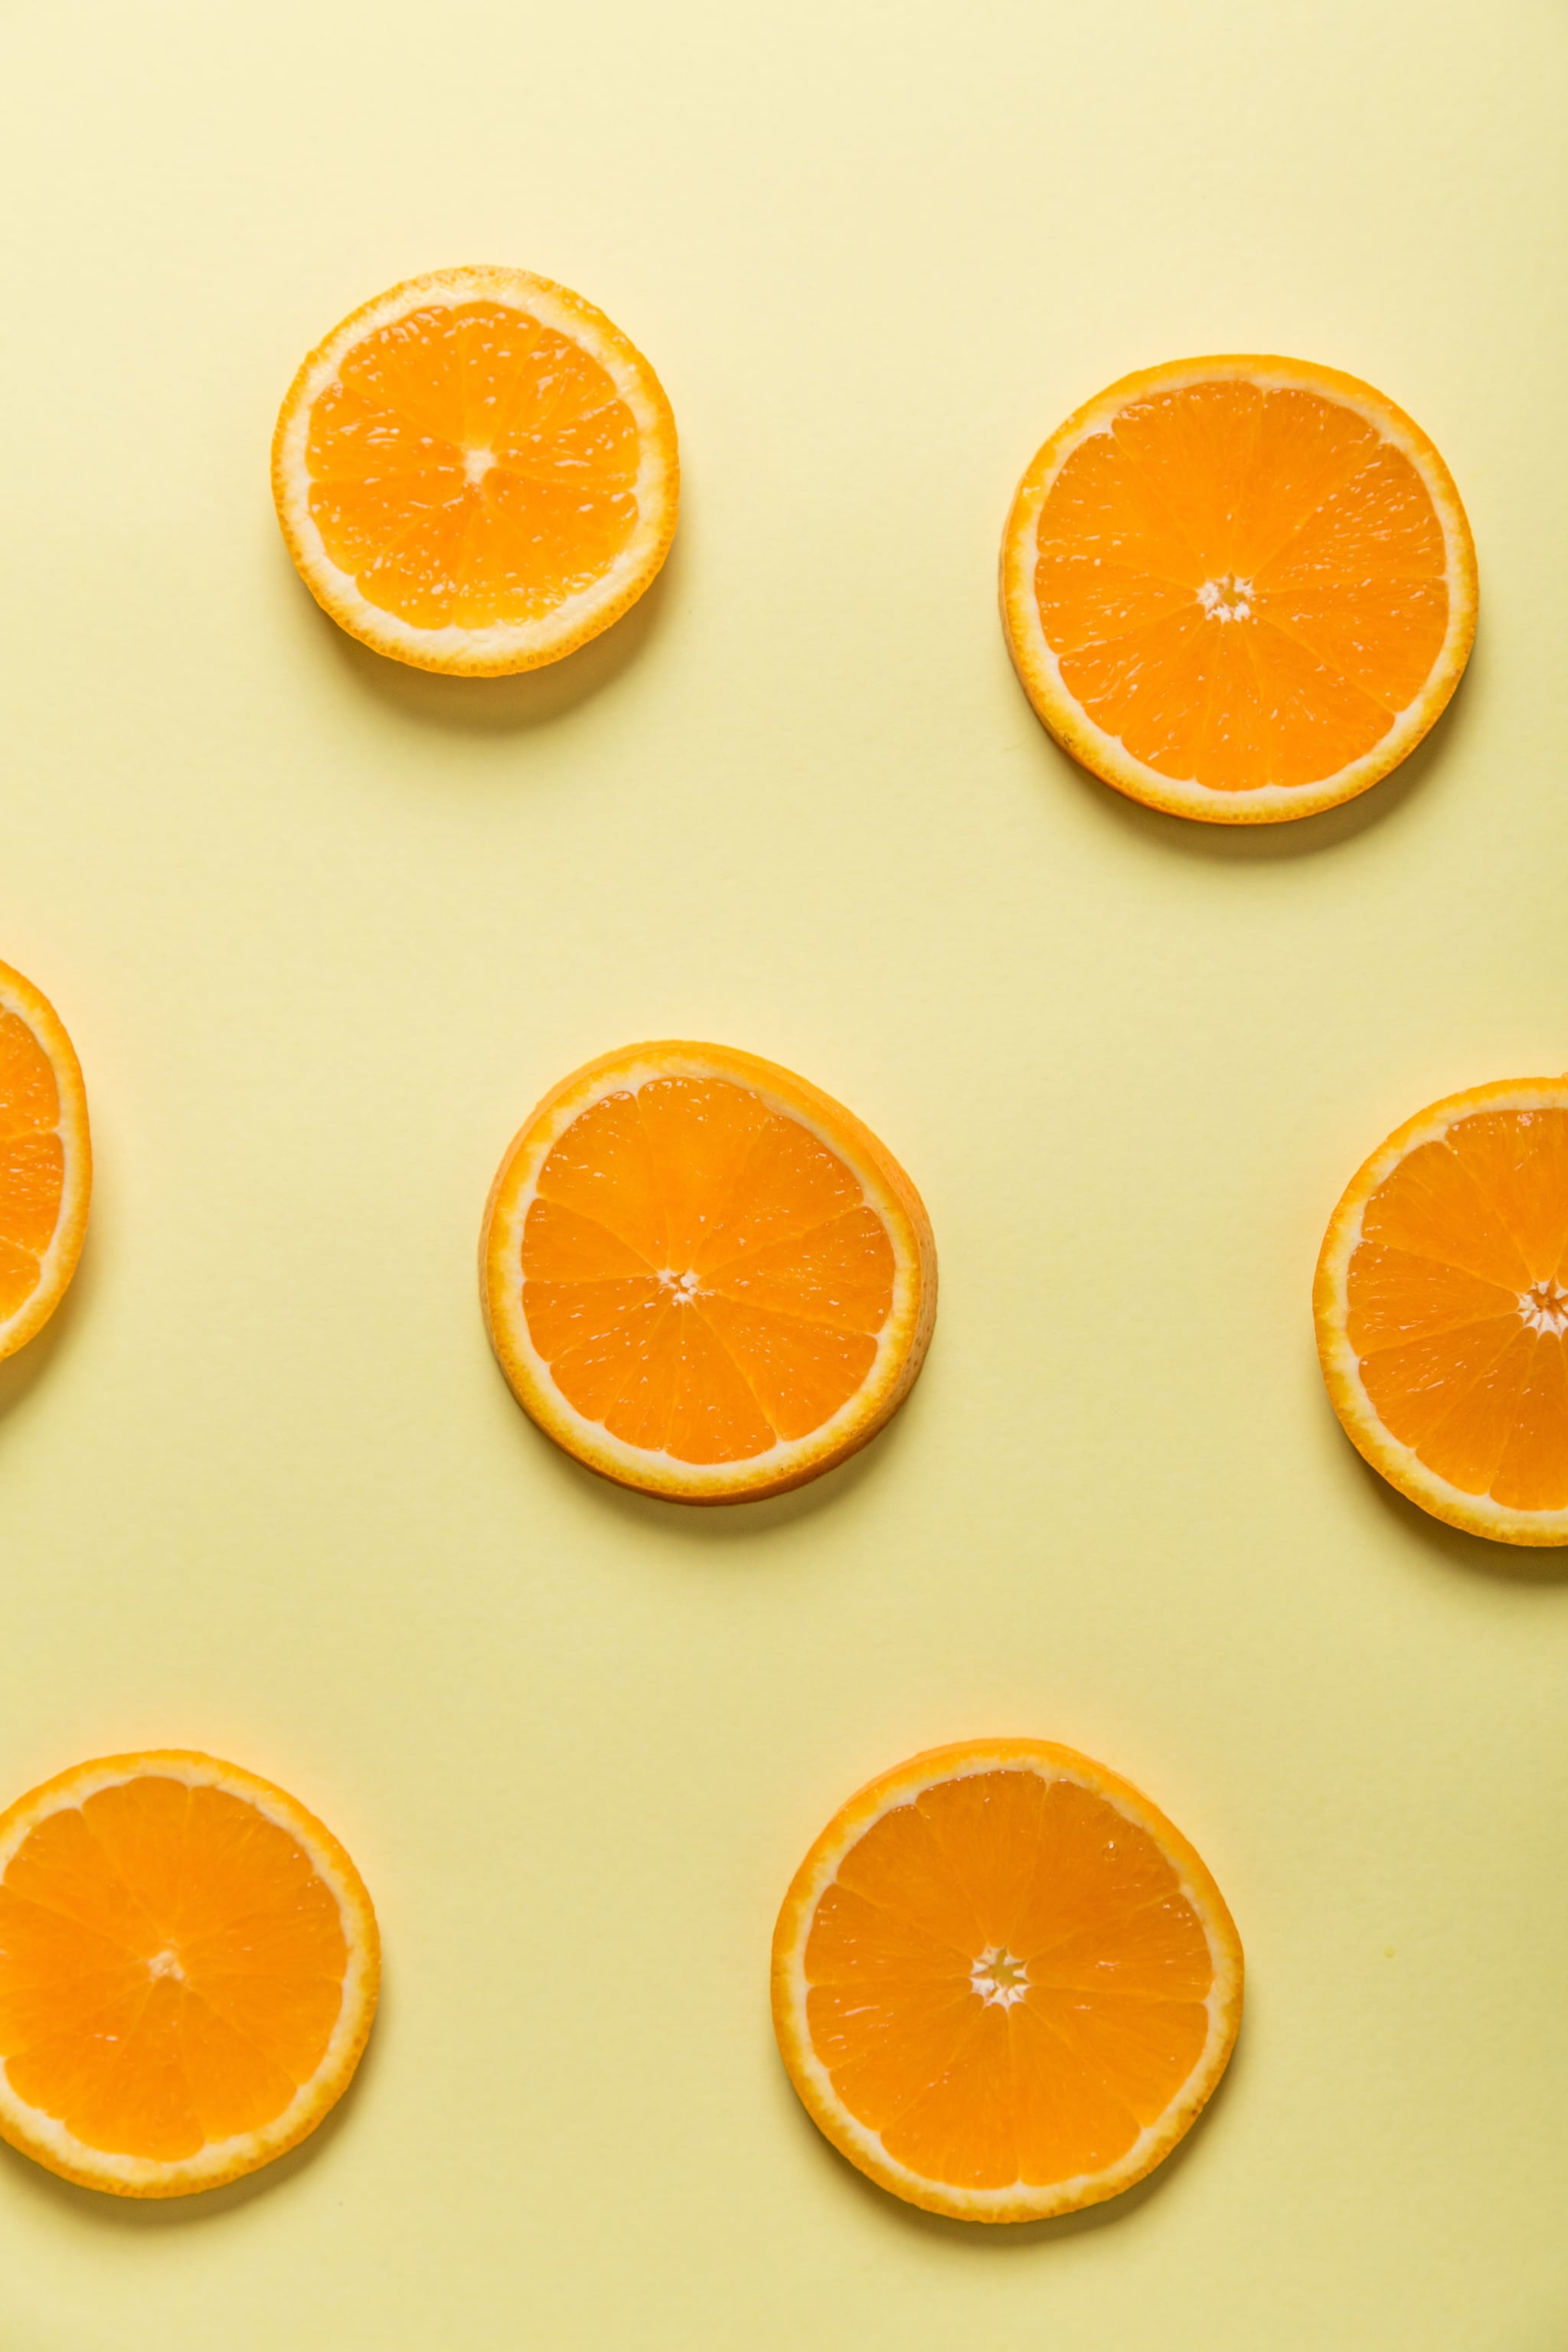 Amber Orange Solid Color Background Wallpaper for Mobile Phone